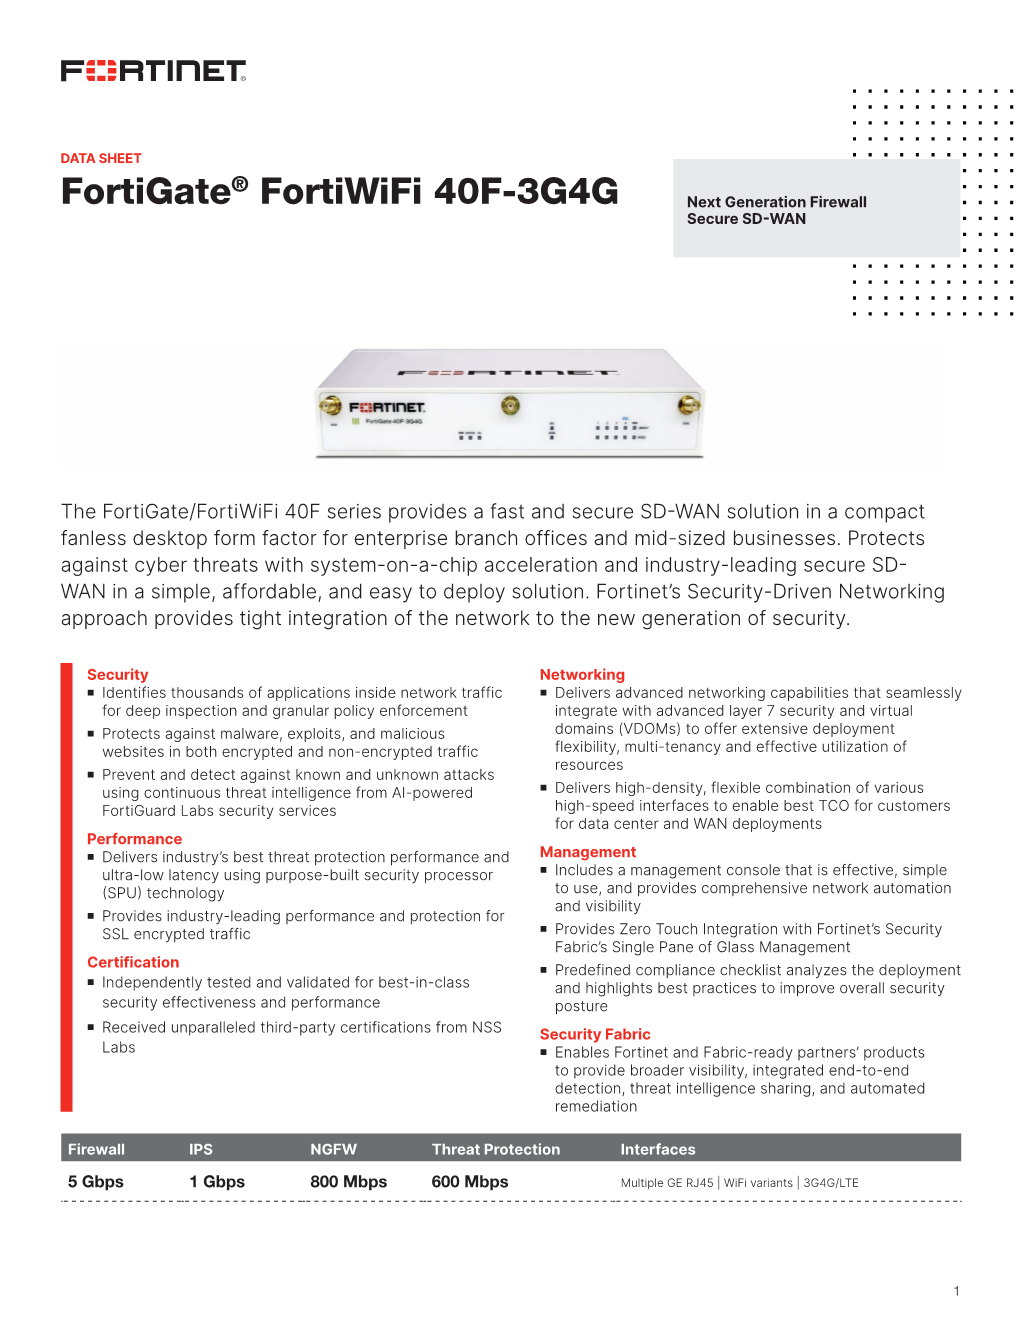 Fortigate Fortiwifi 40F 3G4G Data Sheet